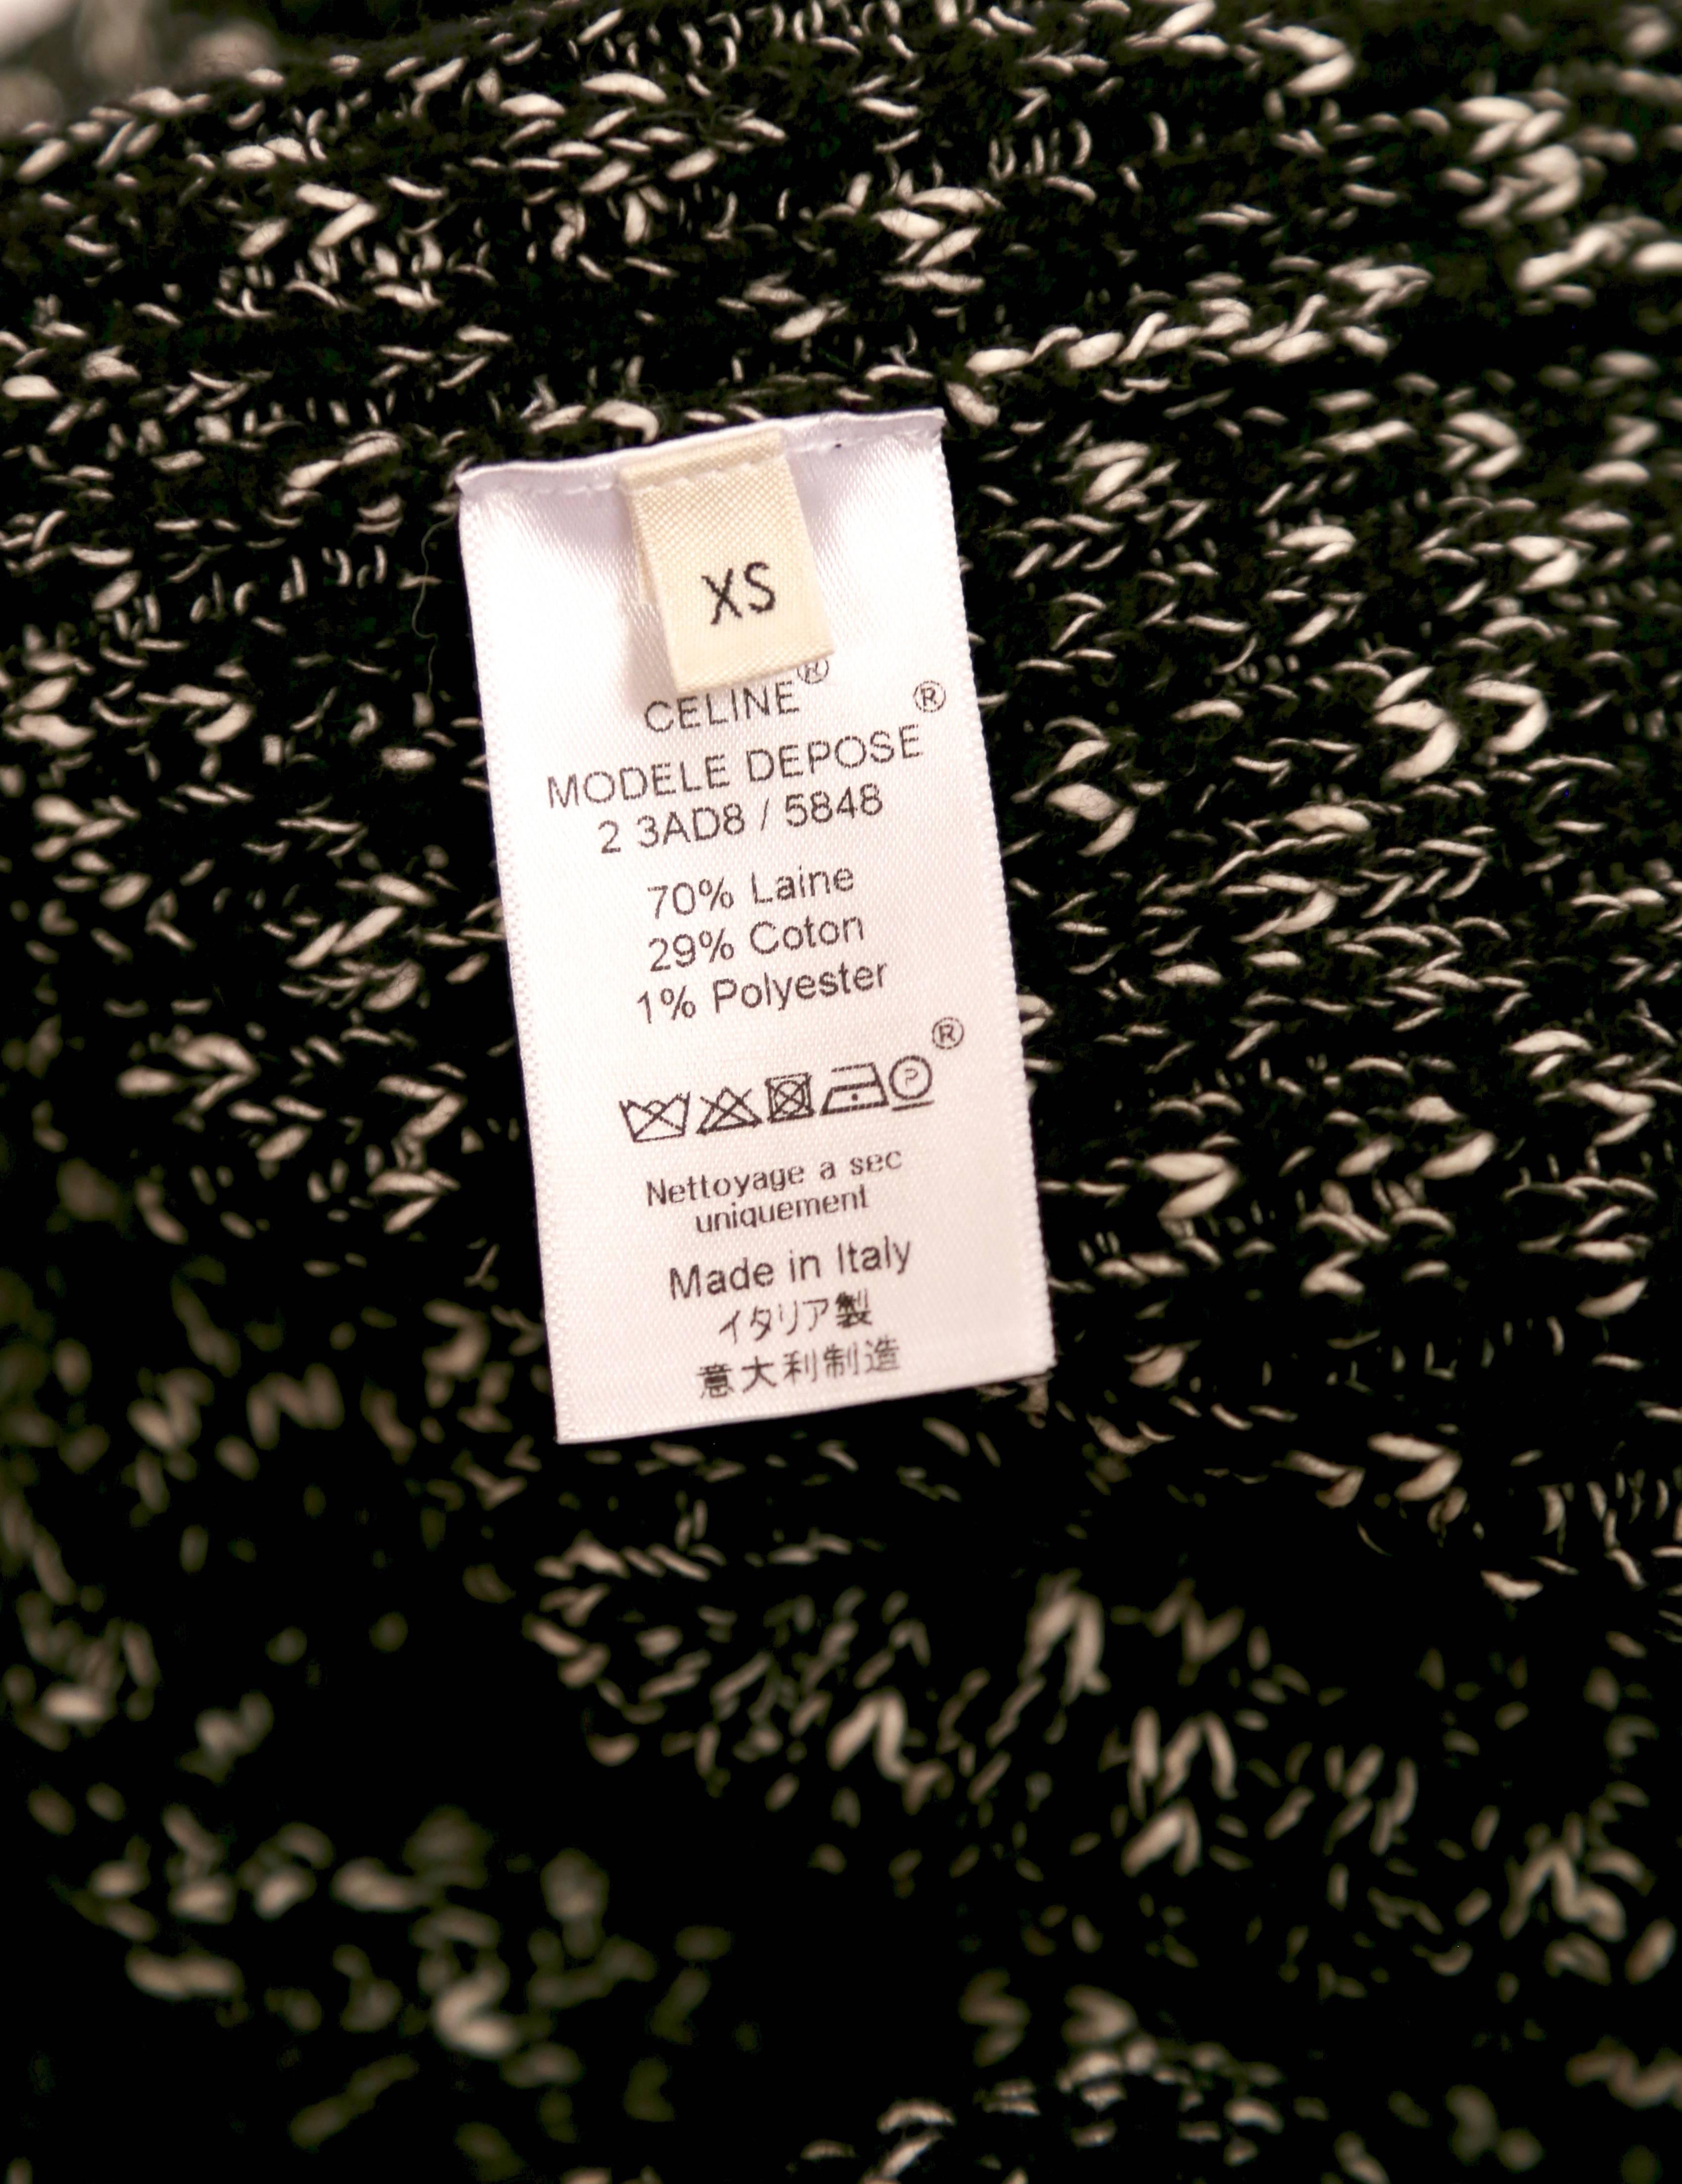 Black CELINE Phoebe Philo black & white tunic sweater dress - RUNWAY